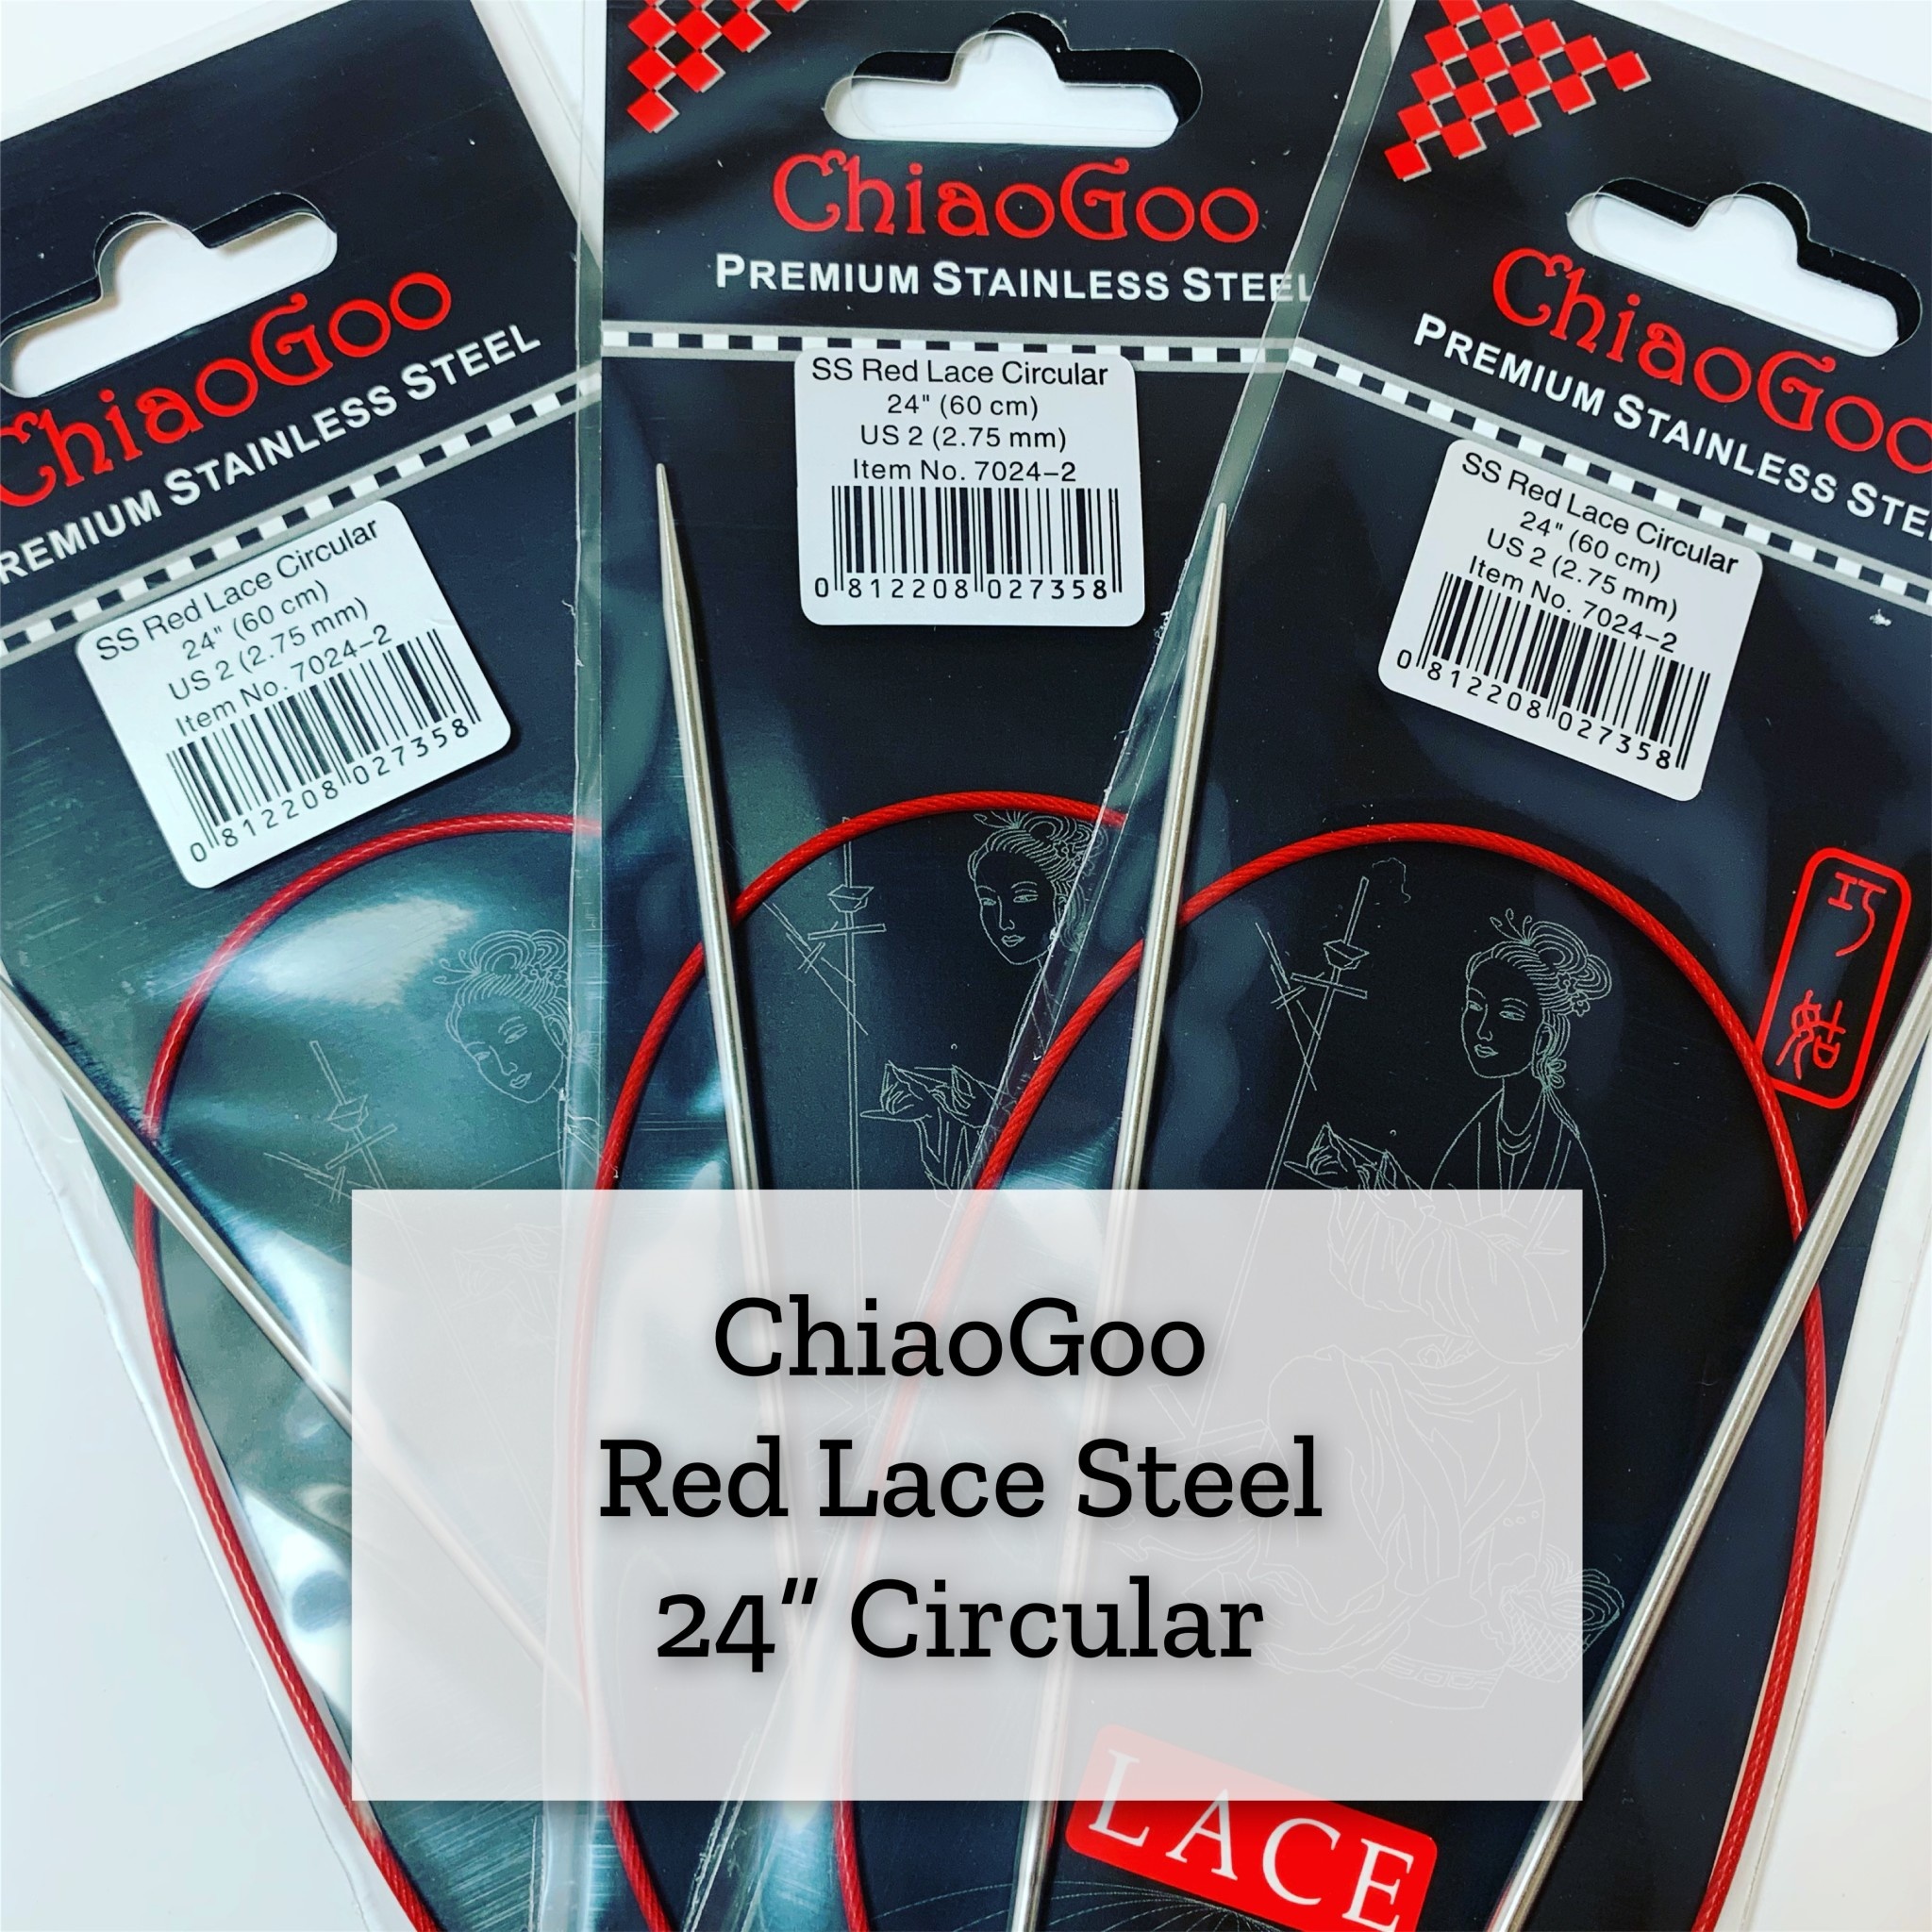 ChiaoGoo Red Lace Steel - 24" 3 mm